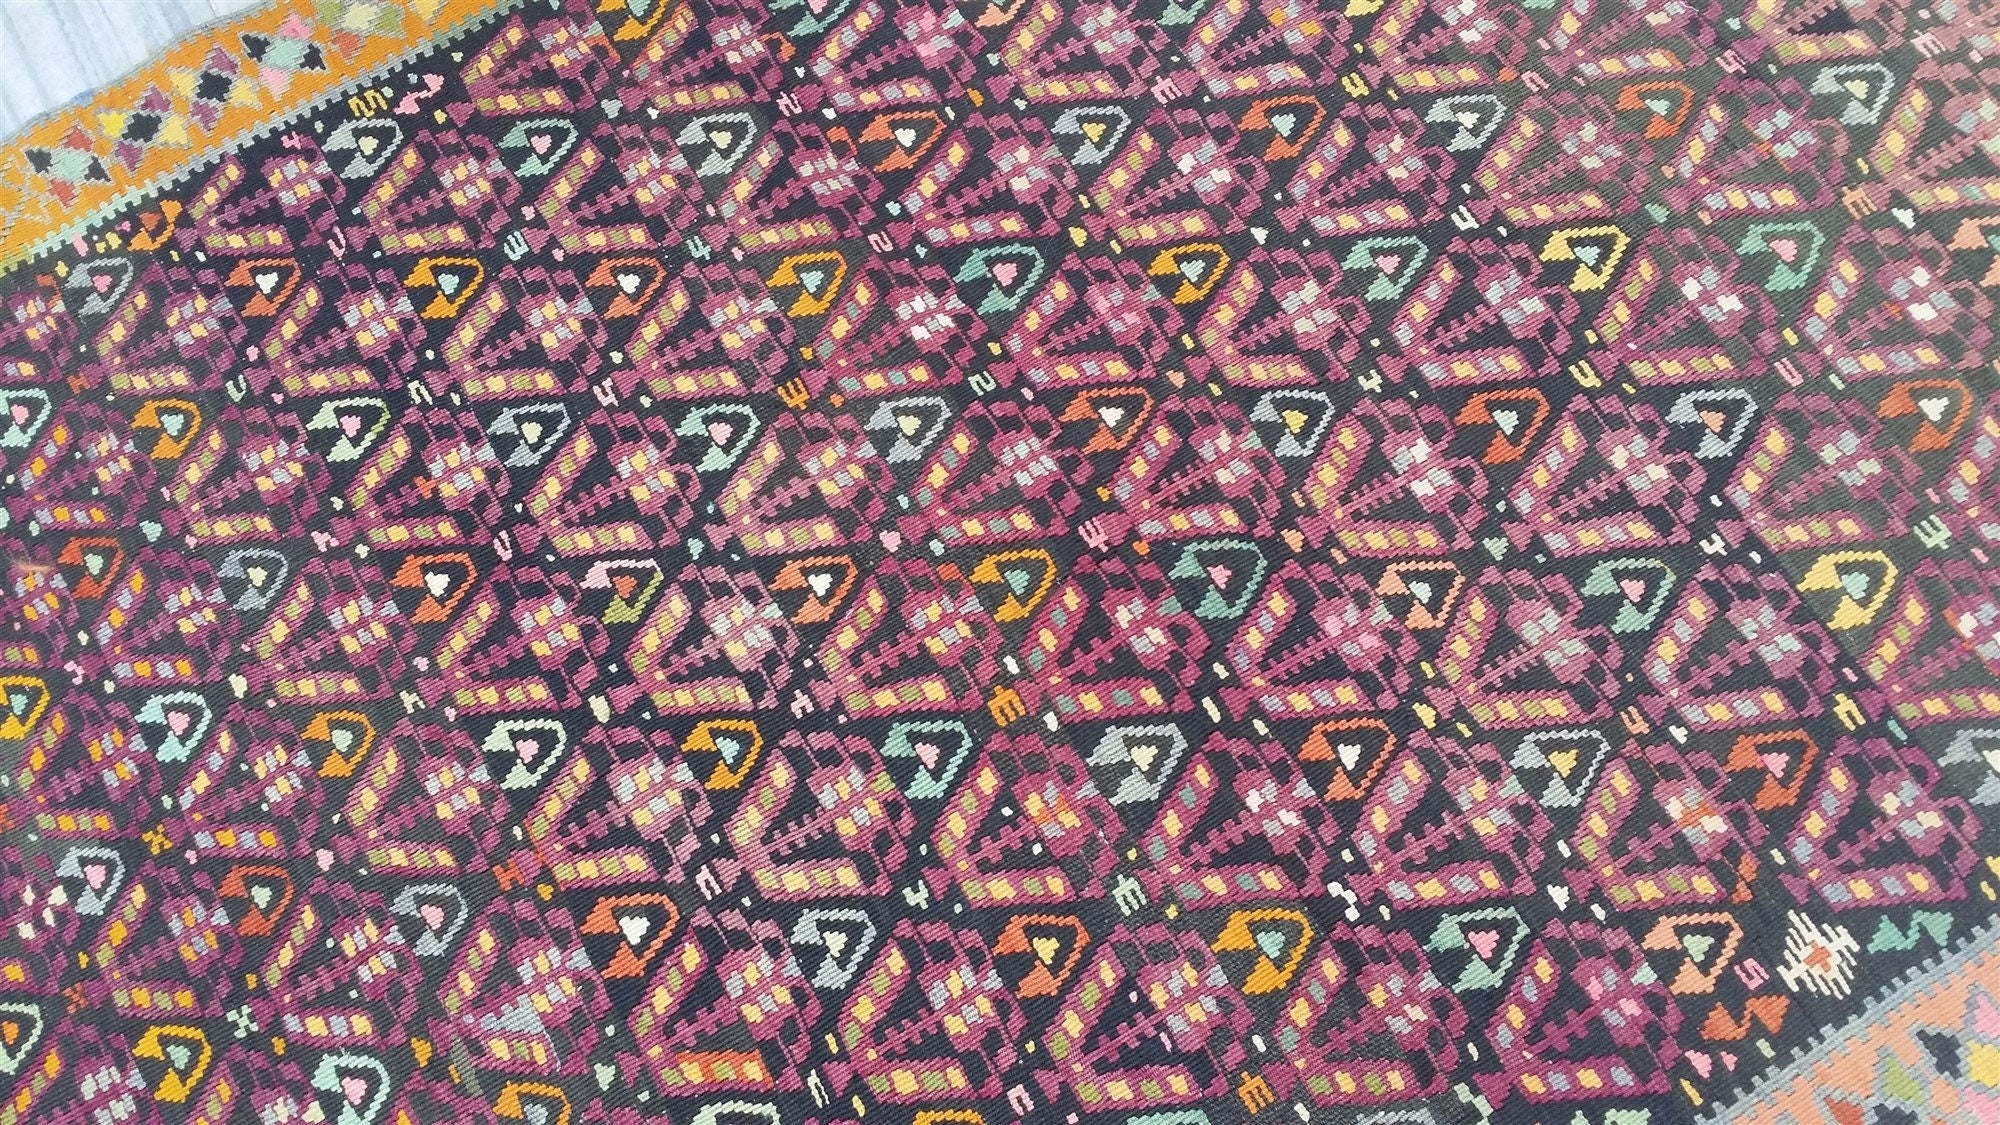 Vintage Kilim Rug 6 x 4 ft Brown Pink Green Turkish Kilim, Boho Rustic Handmade Natural Wool Floor Rug, Persian Area Rug